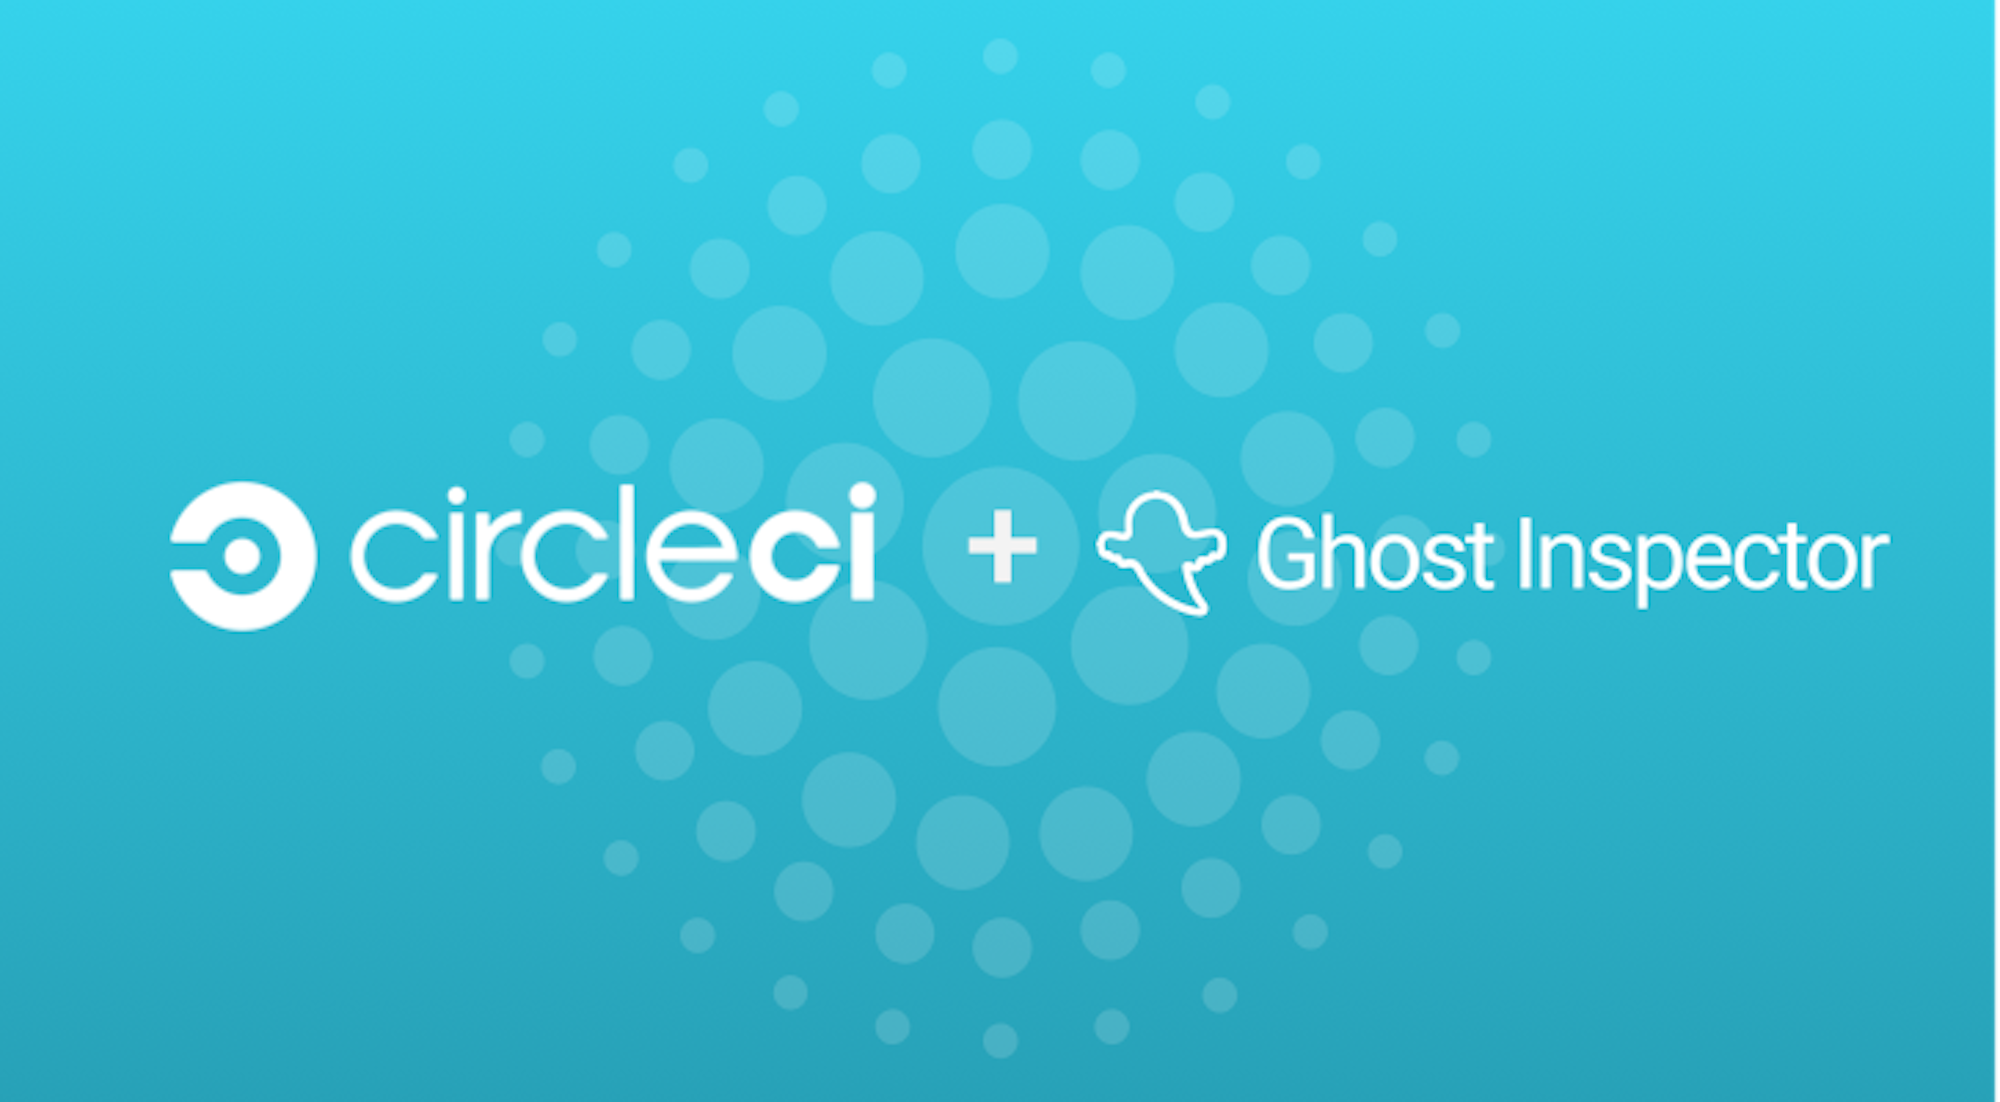 CirclecI + Ghost Inspector